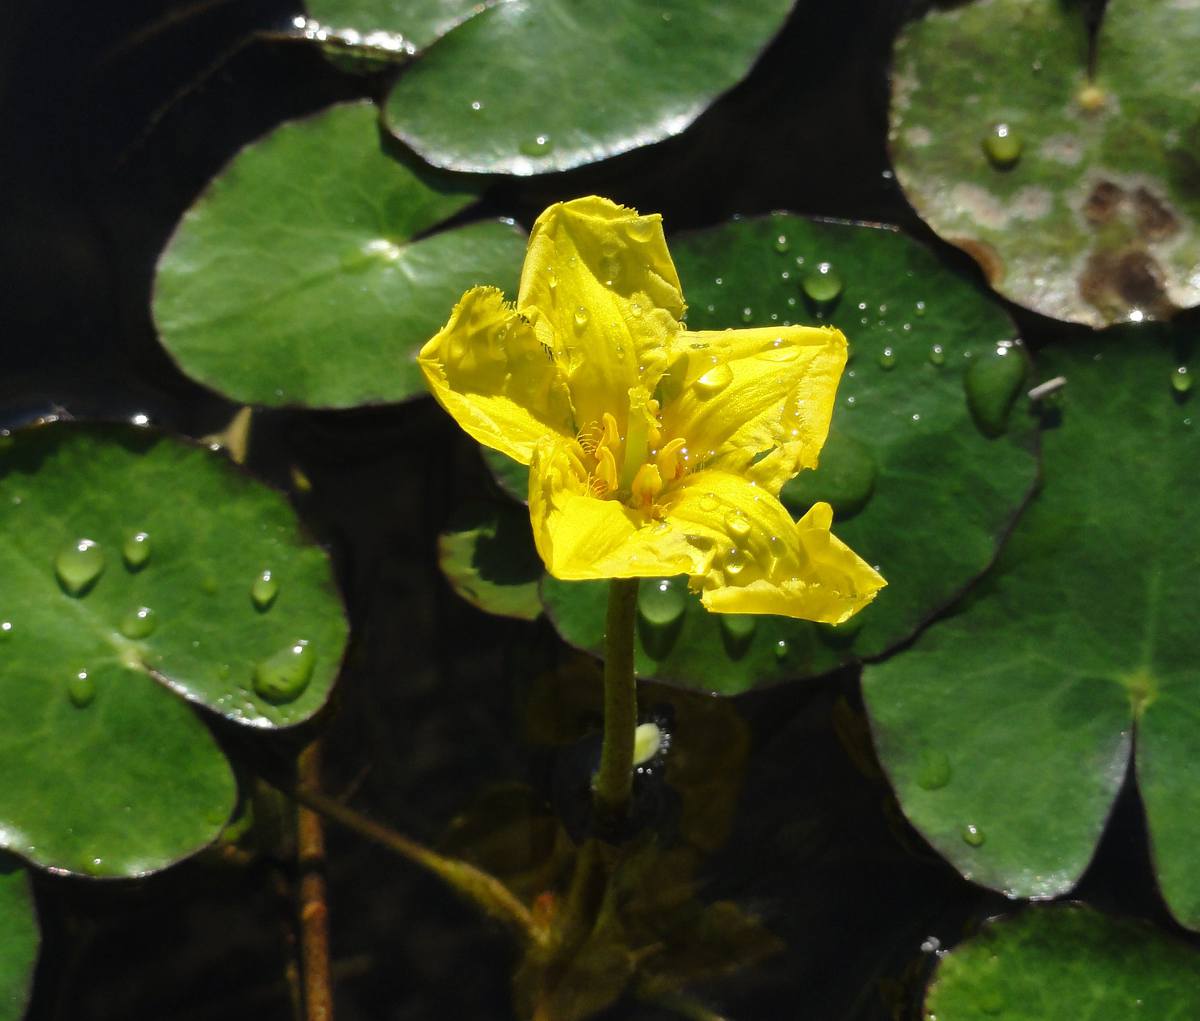 nenuphar jaune  plante bassin nymphea pond 30/80cm 